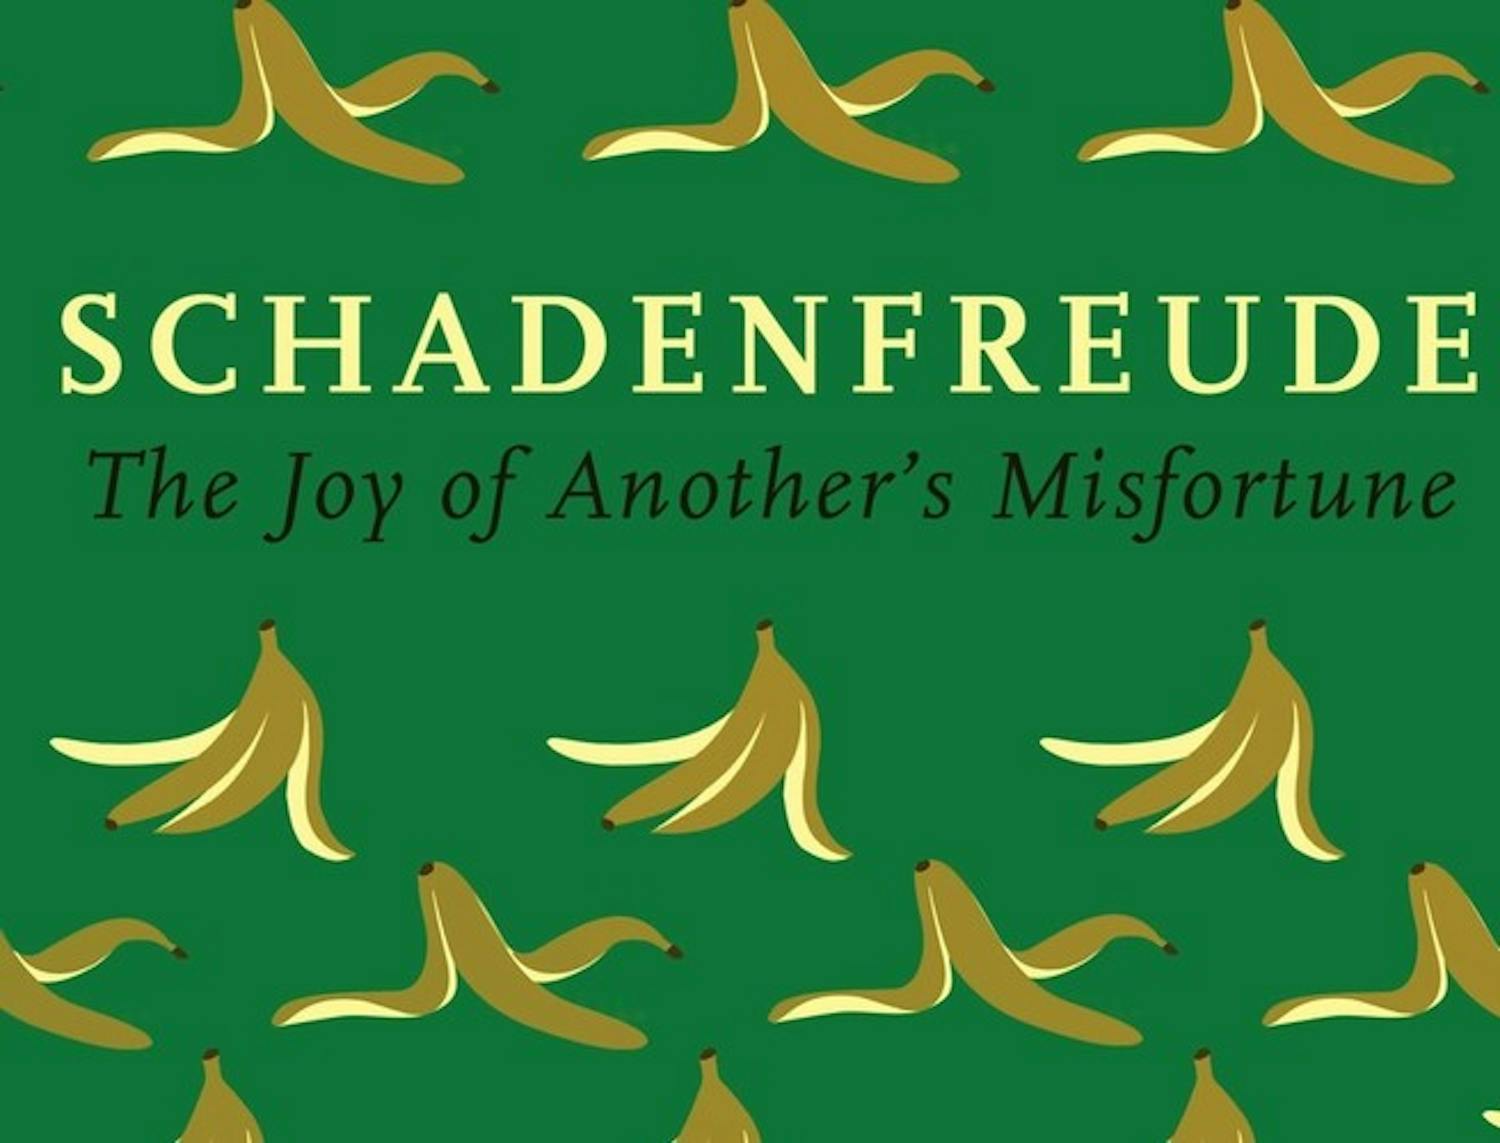 Chapter 252: 'Schadenfreude' with Tiffany Watt Smith